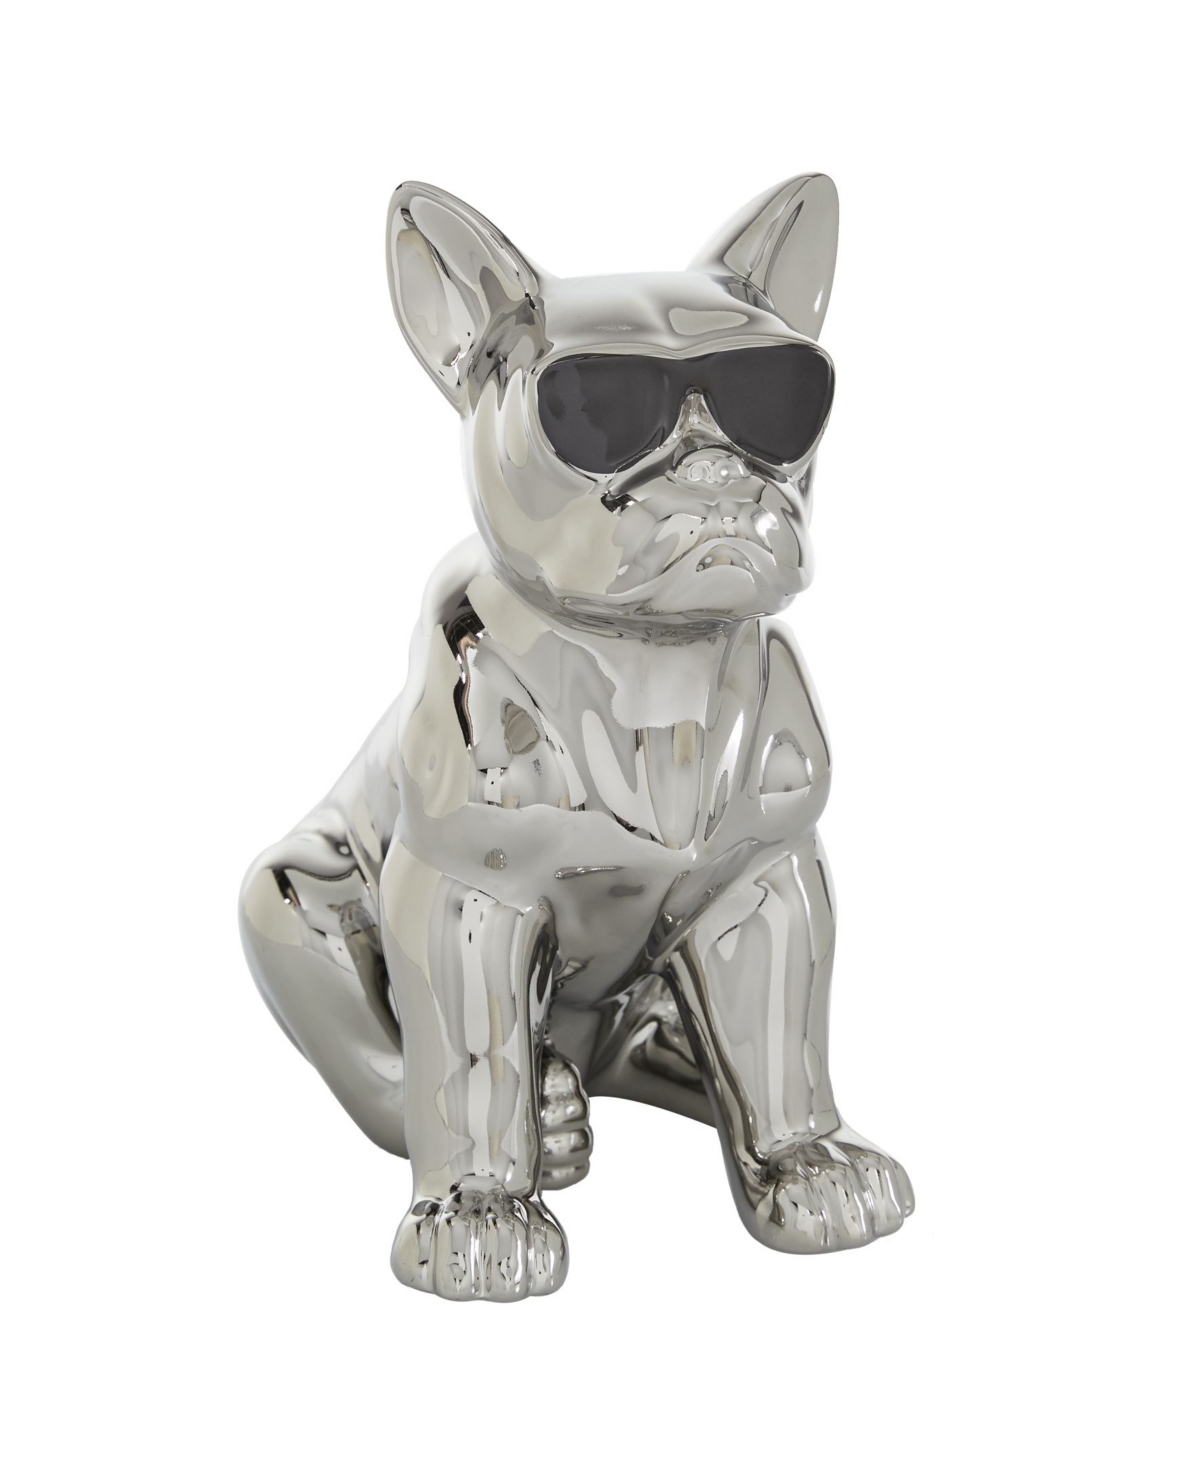 Cosmoliving By Cosmopolitan Ceramic Glam Dog Sculpture, 12" X 6" In Silver-tone